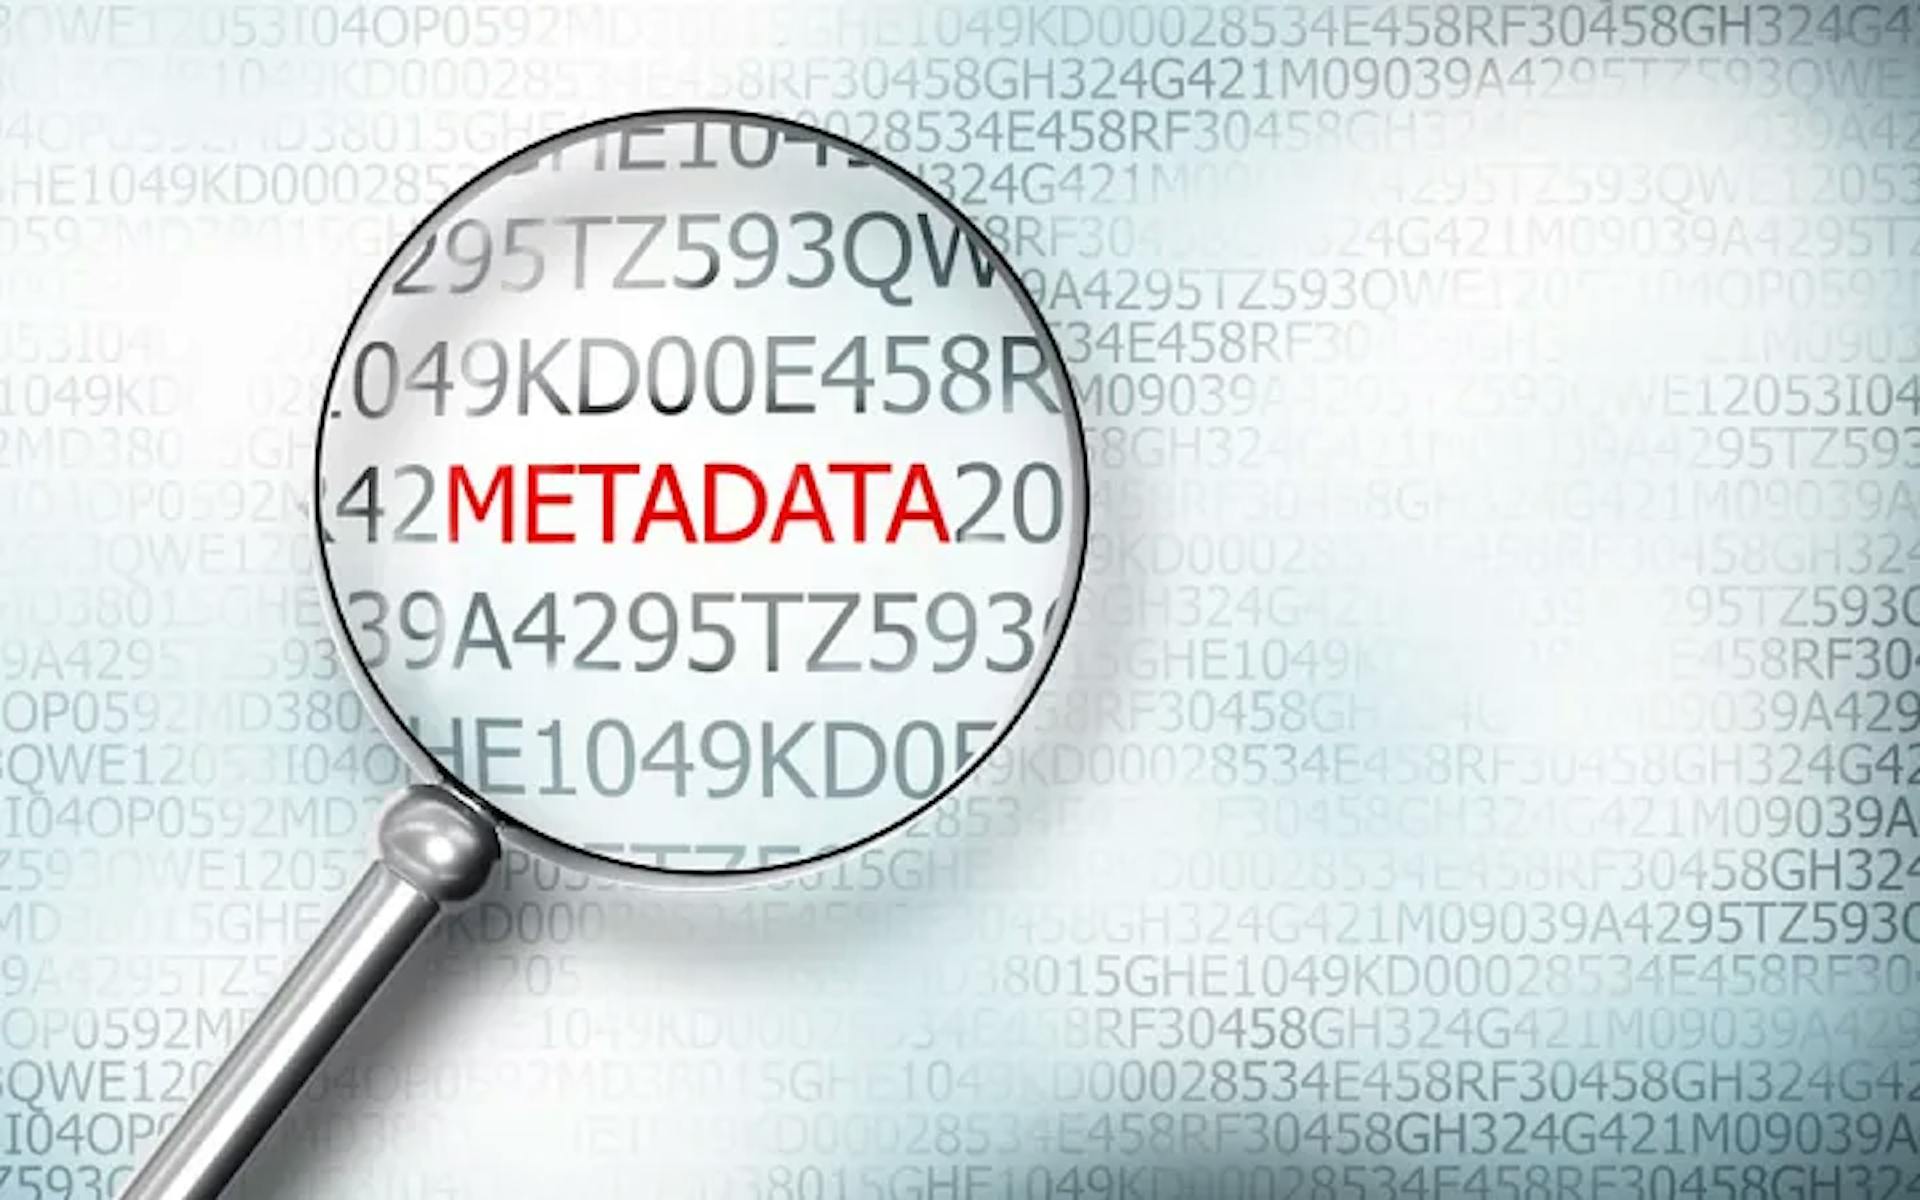 Metadata Analysis